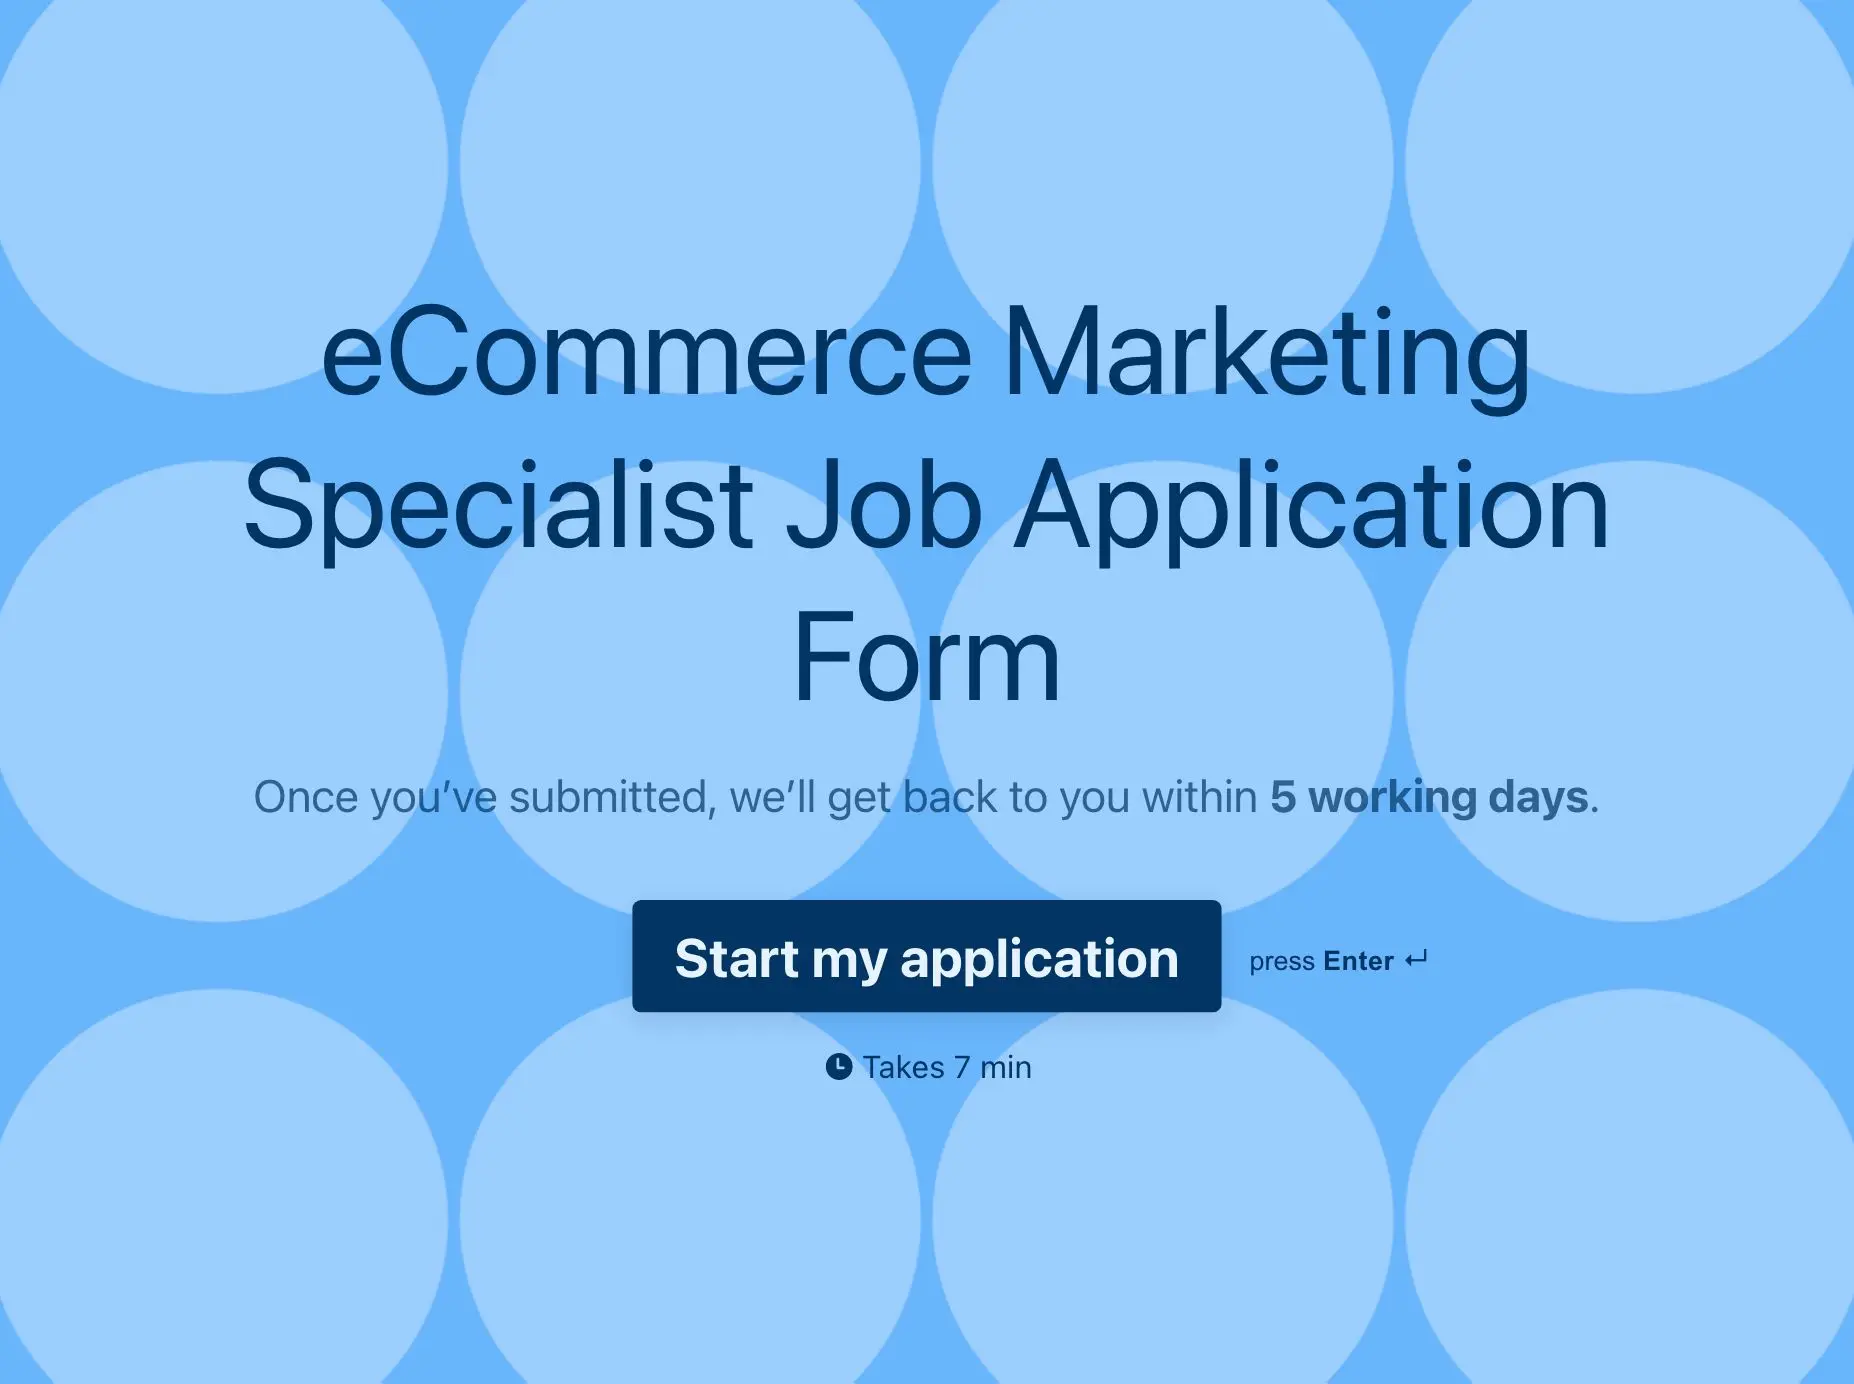 eCommerce Marketing Specialist Job Application Form Template Hero